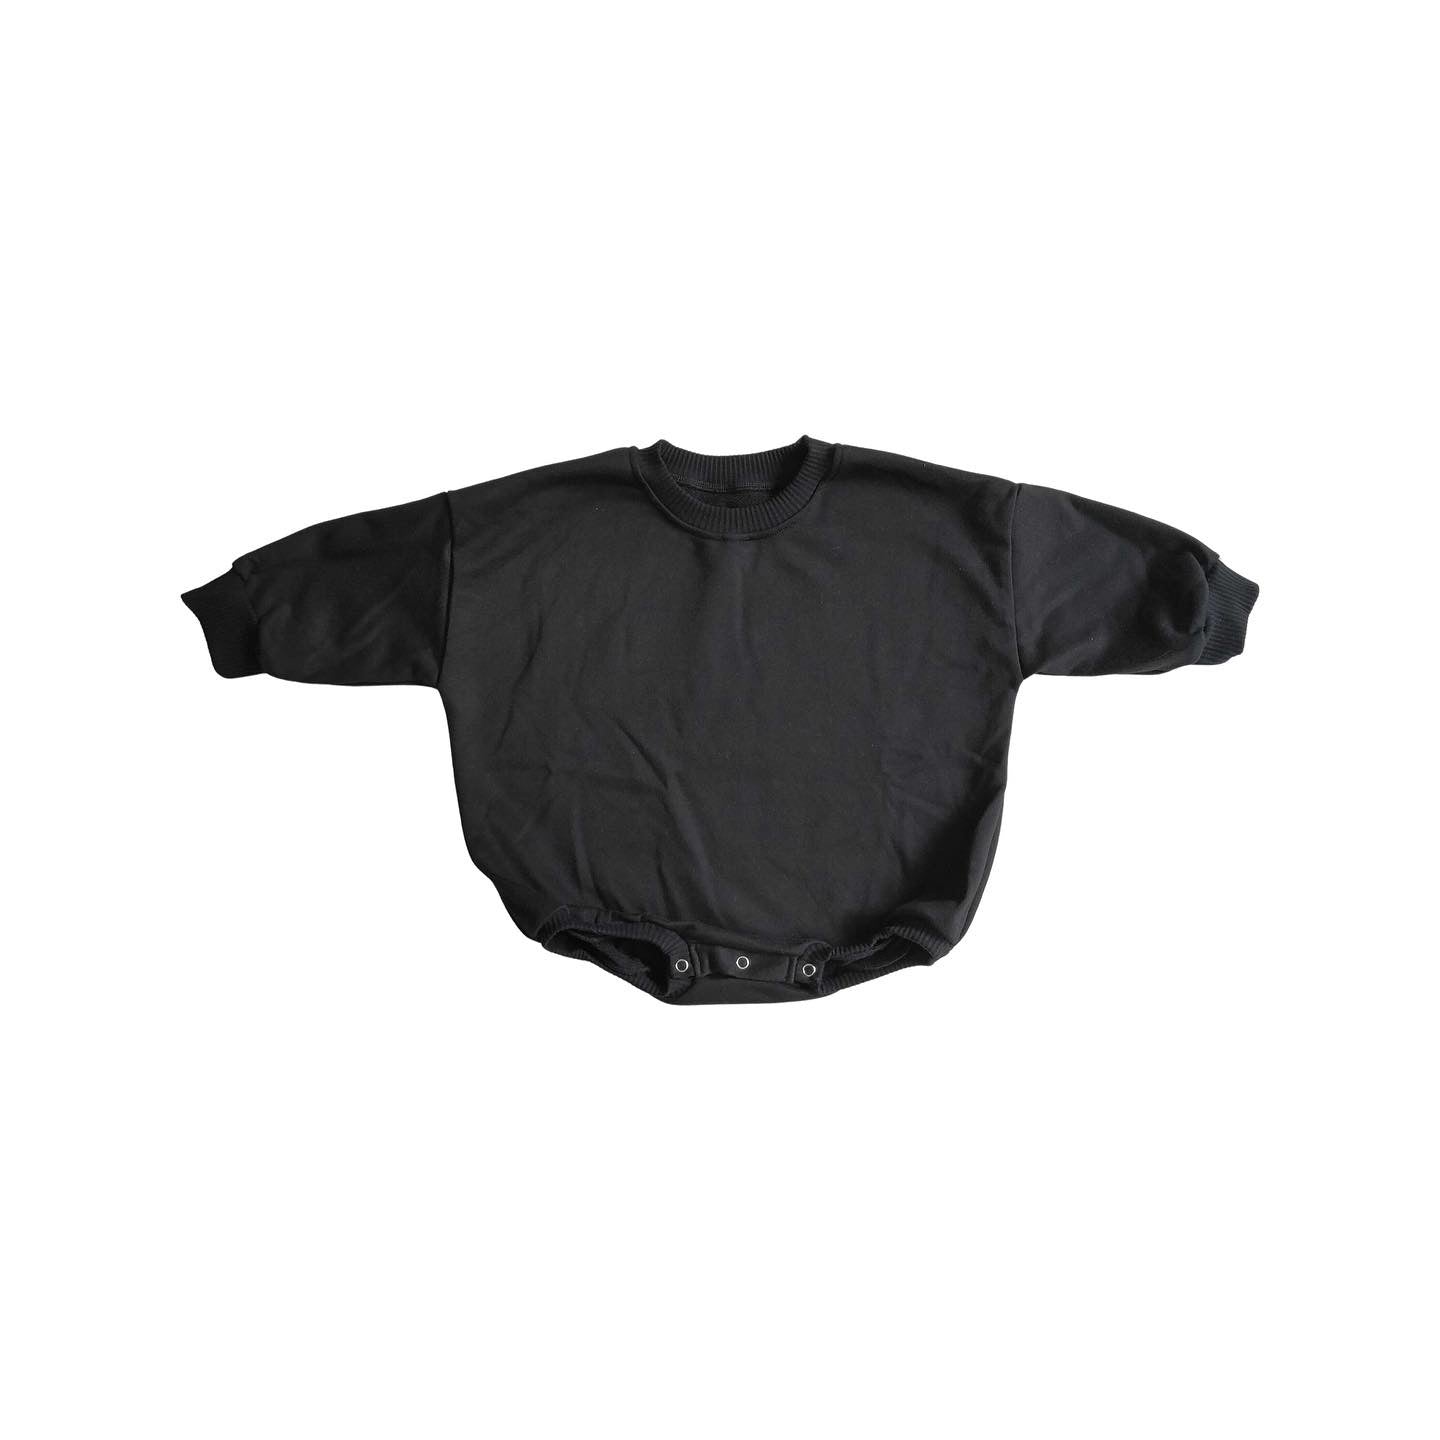 Coal Black Sweatshirt Romper